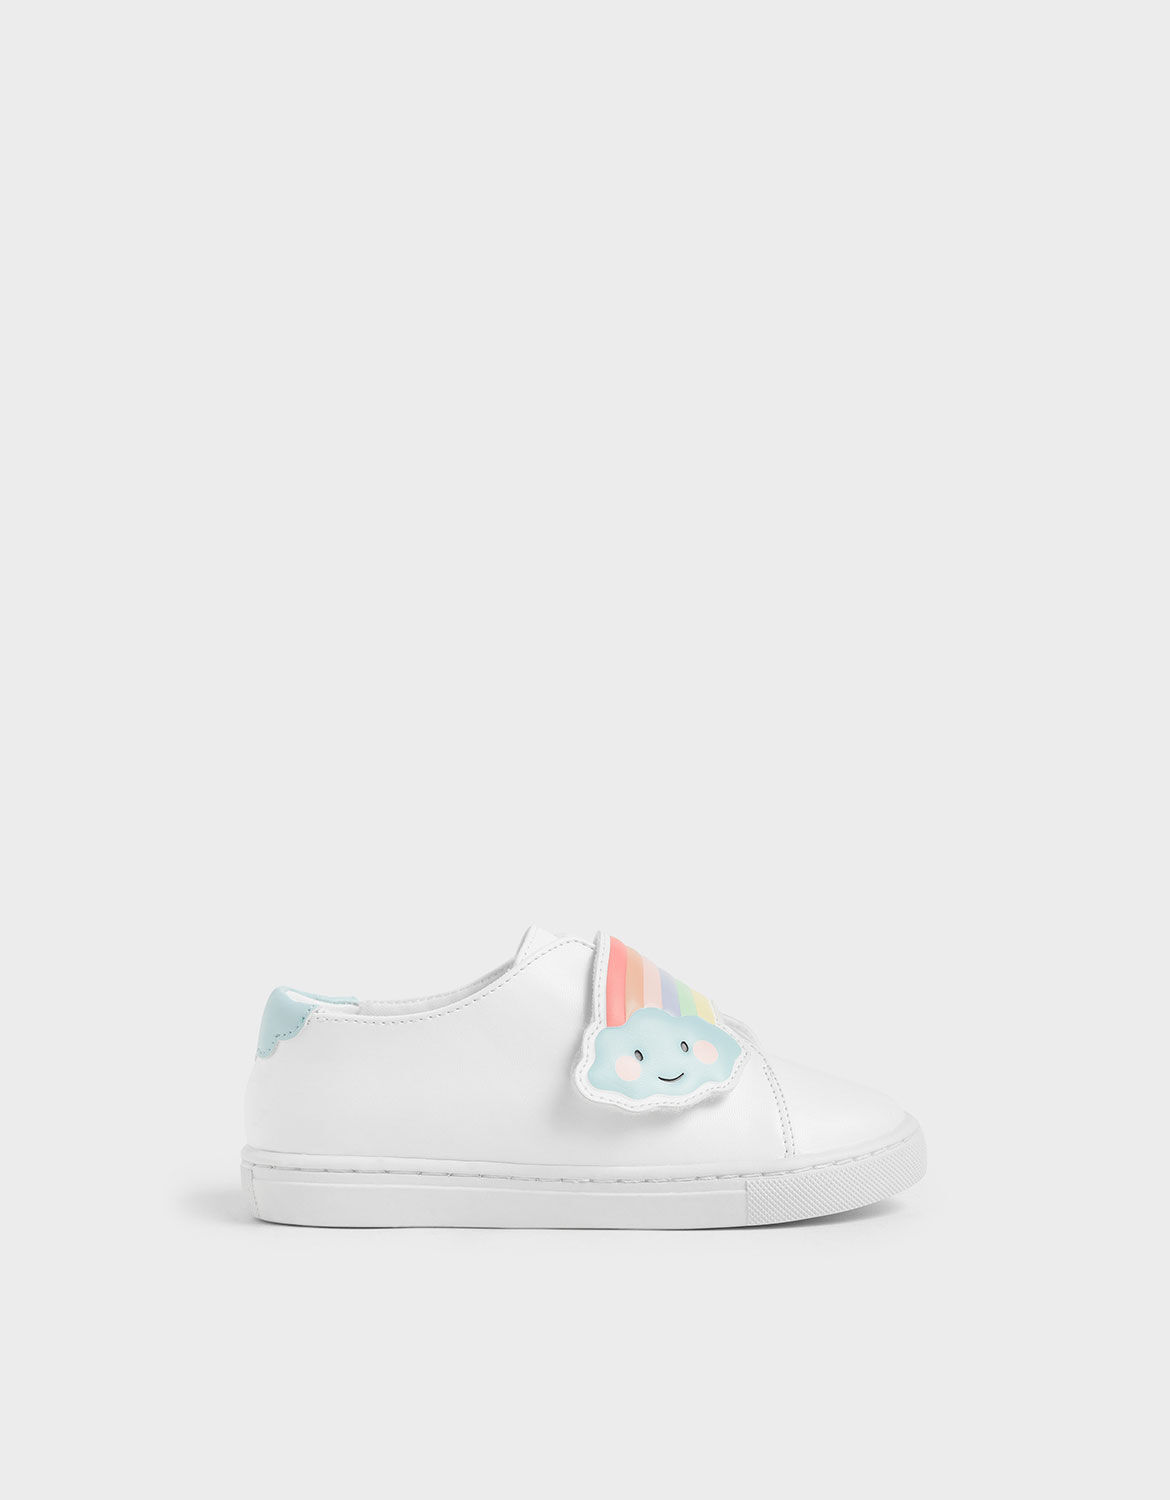 rainbow white sneakers